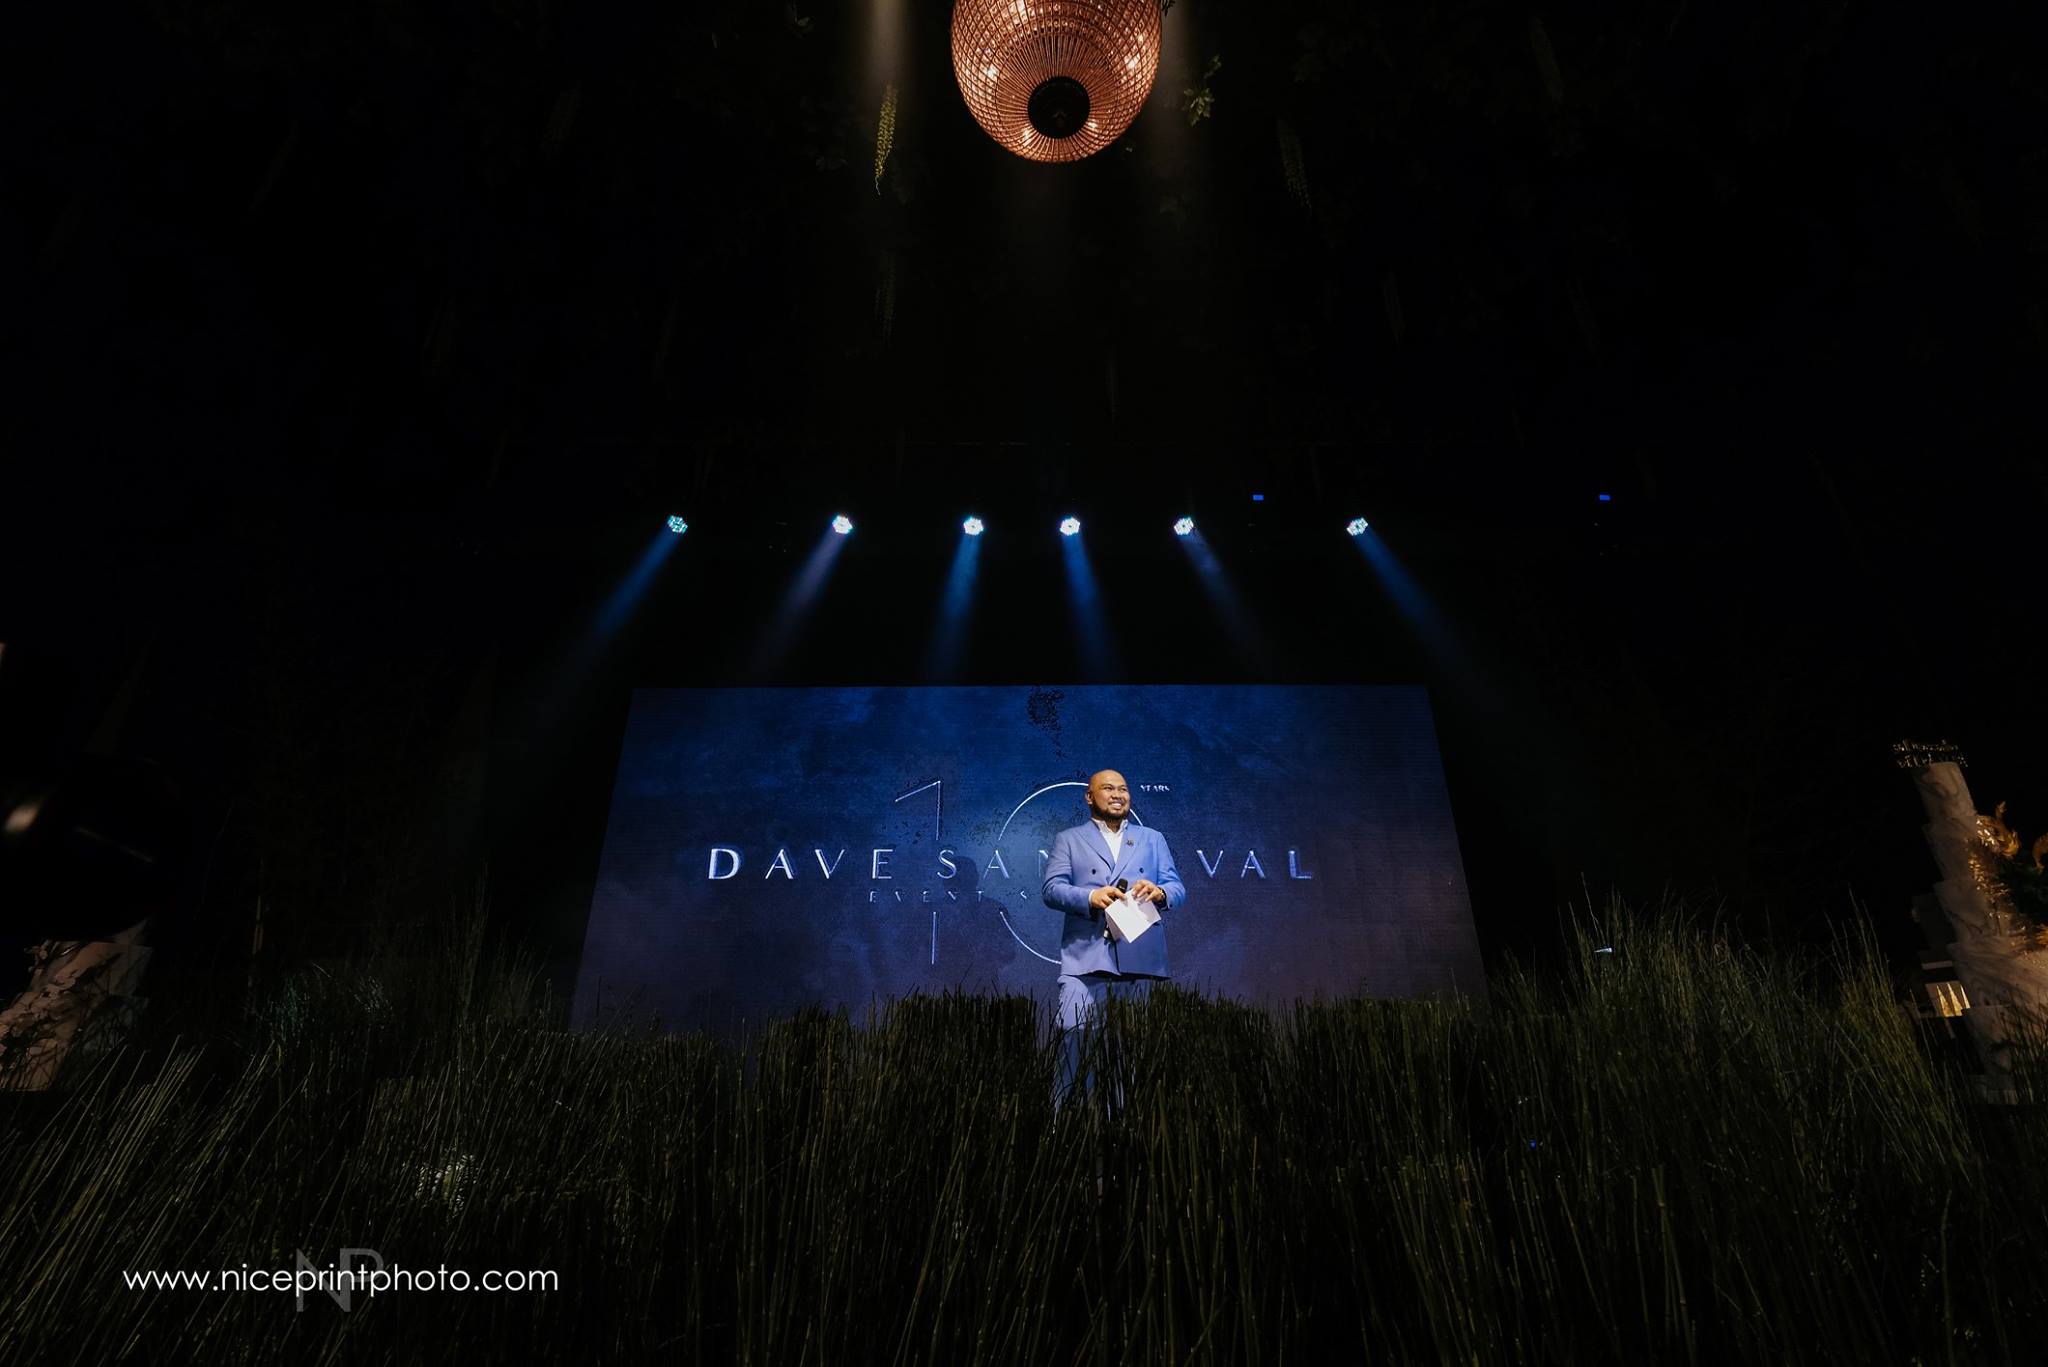 A Decade of Dave